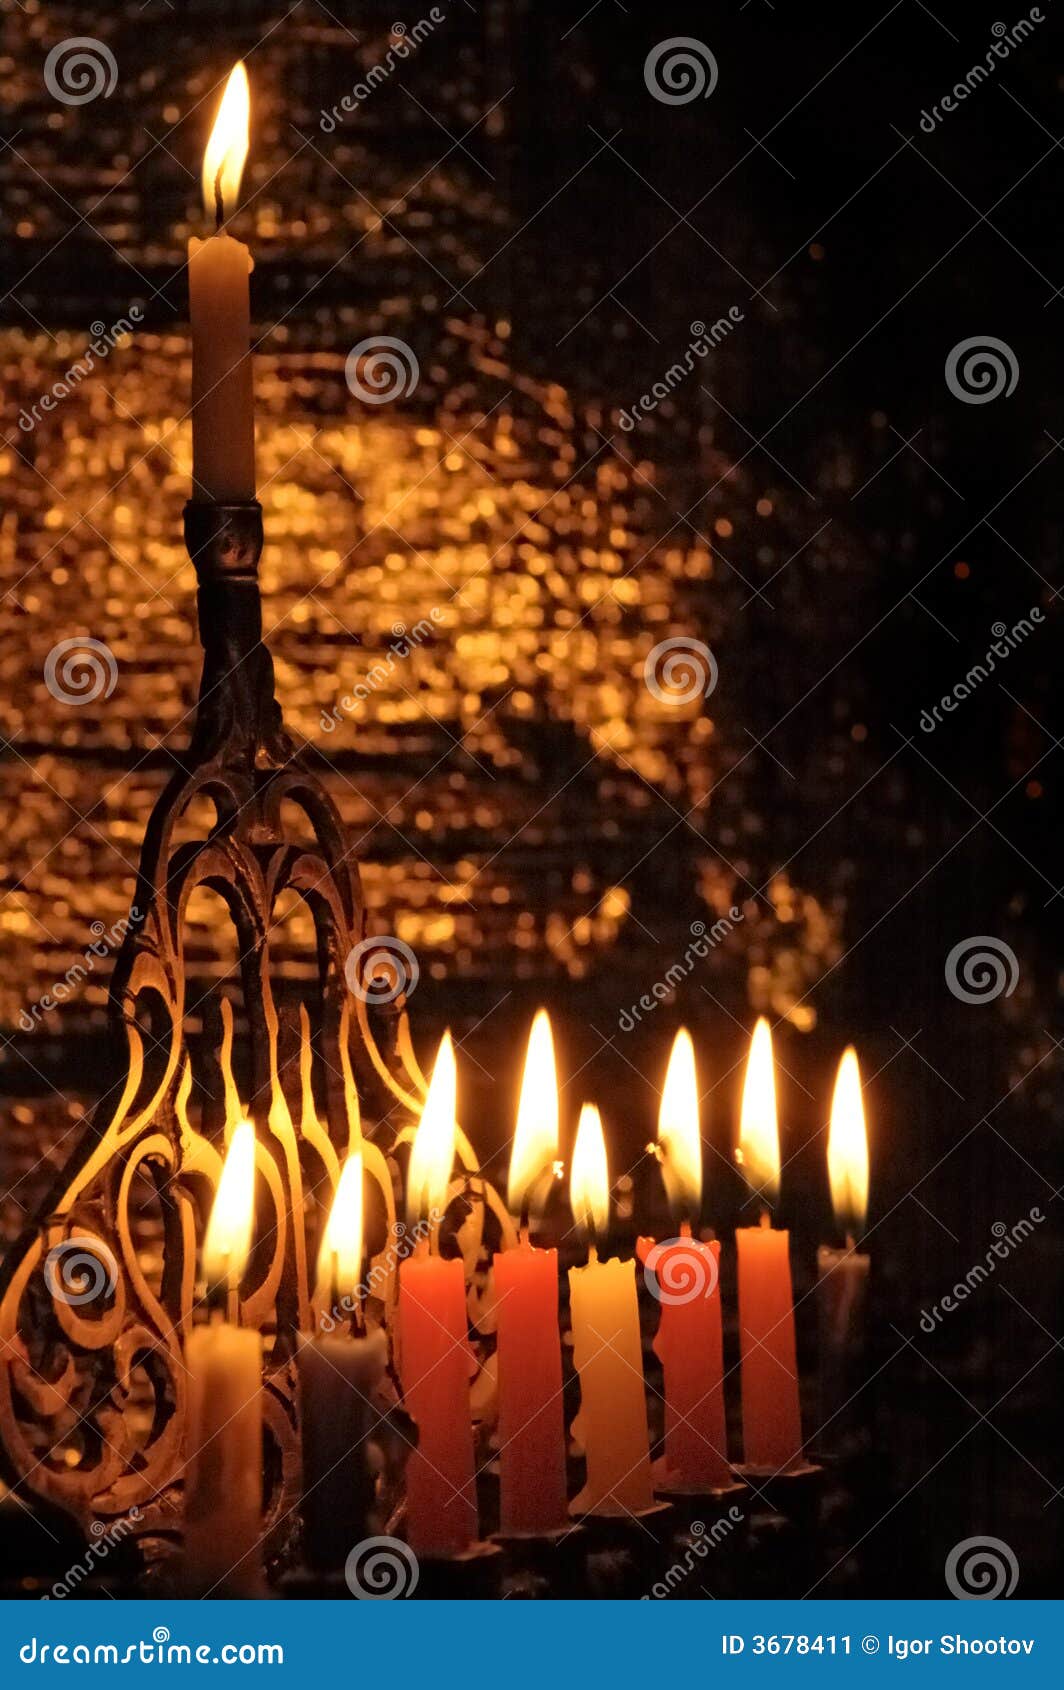 chanuka candles